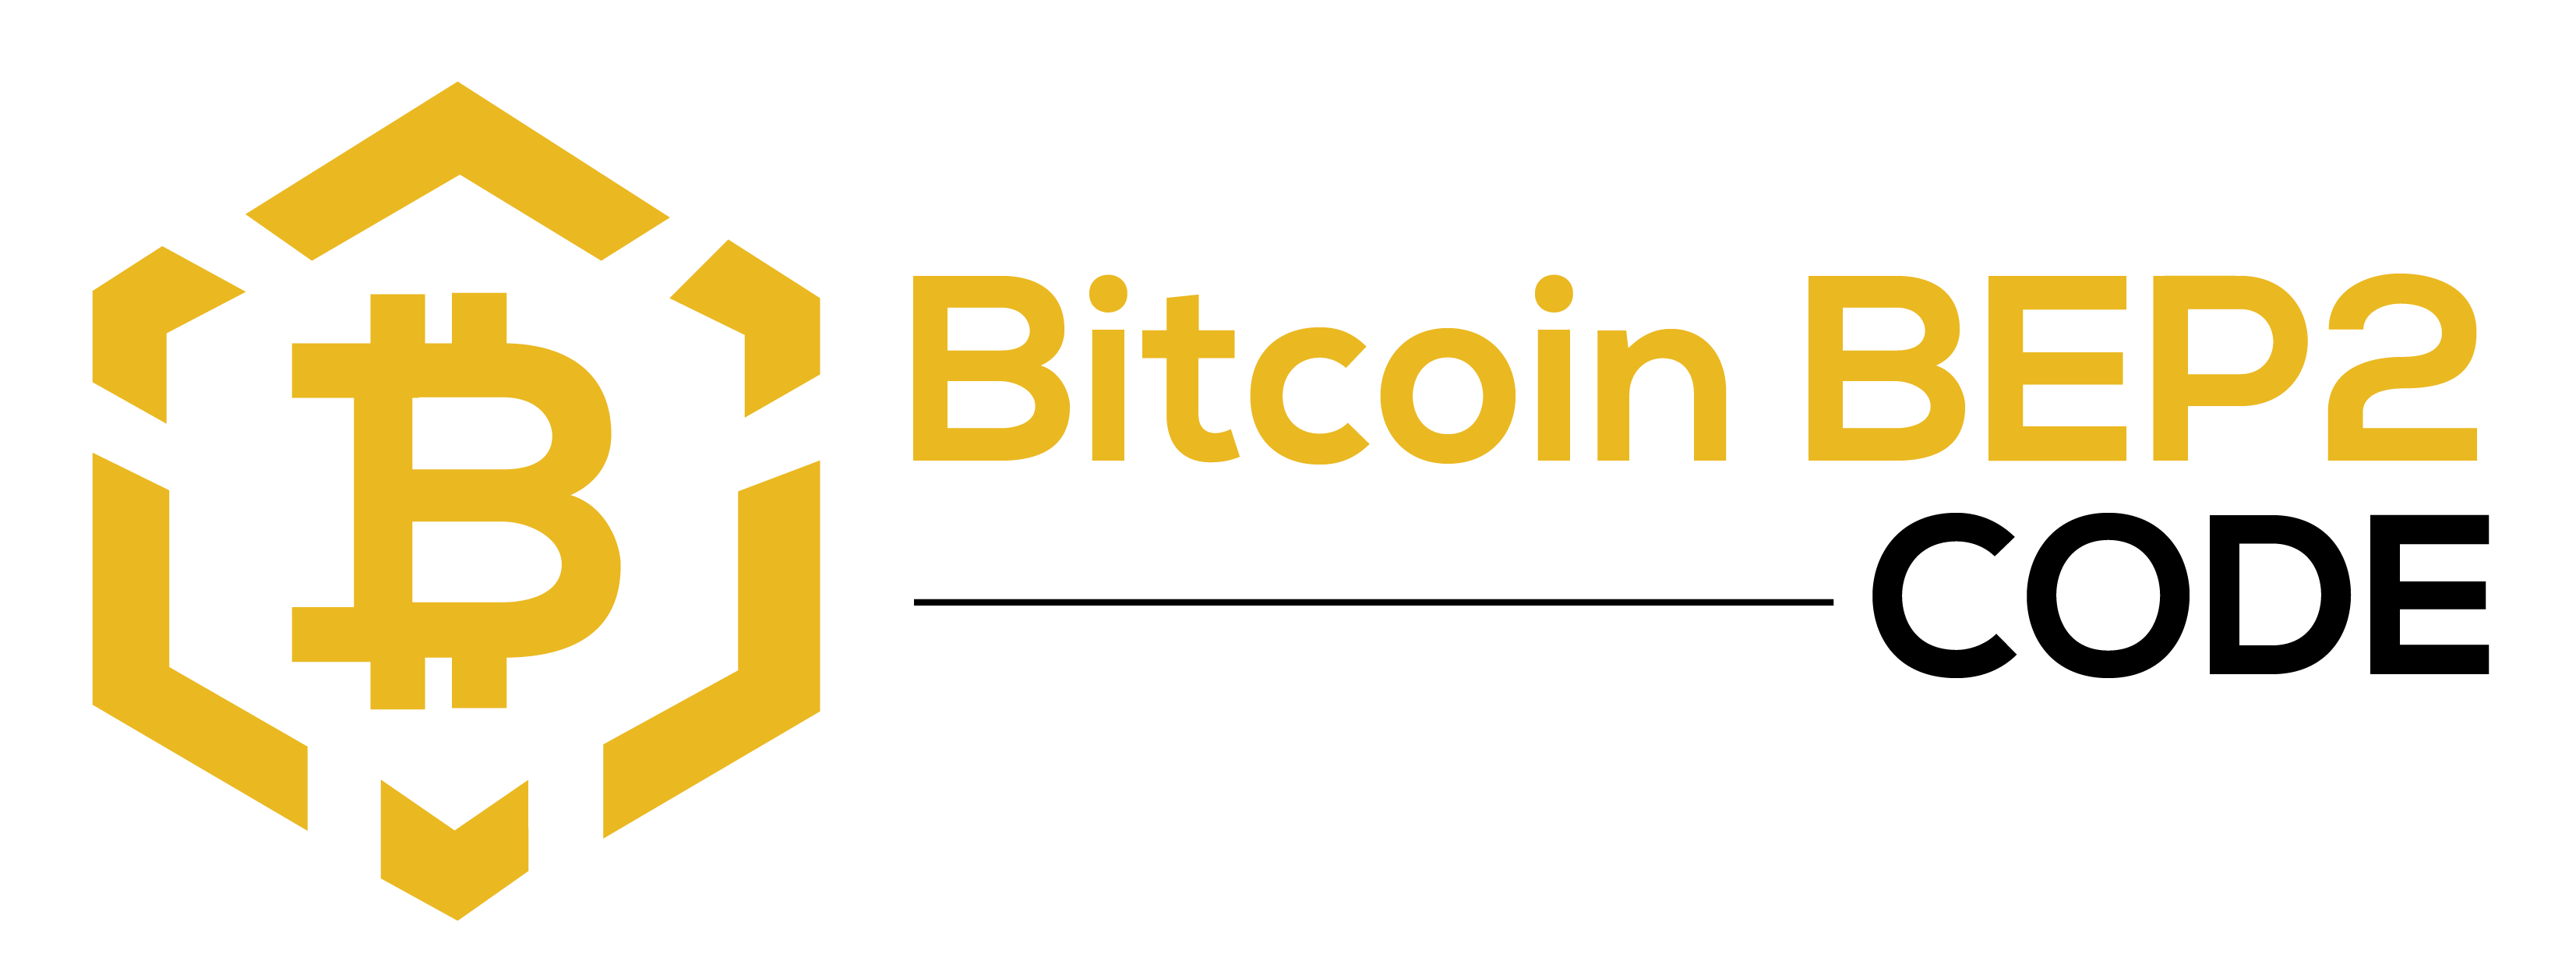 Bitcoin BEP2 Code - spojte sa s nami